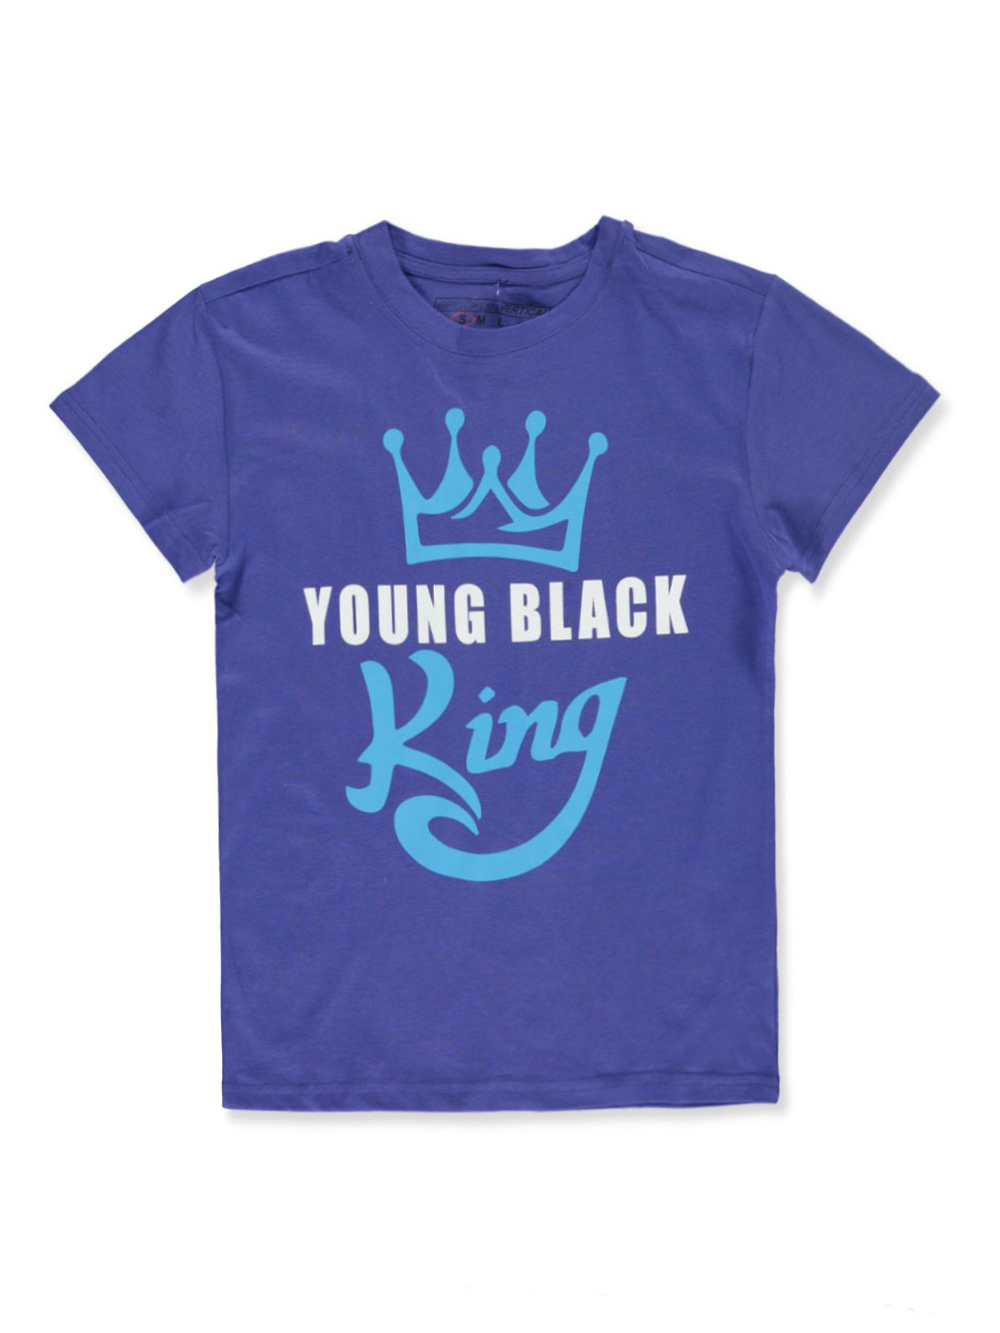 Boys Blackblue T-Shirts